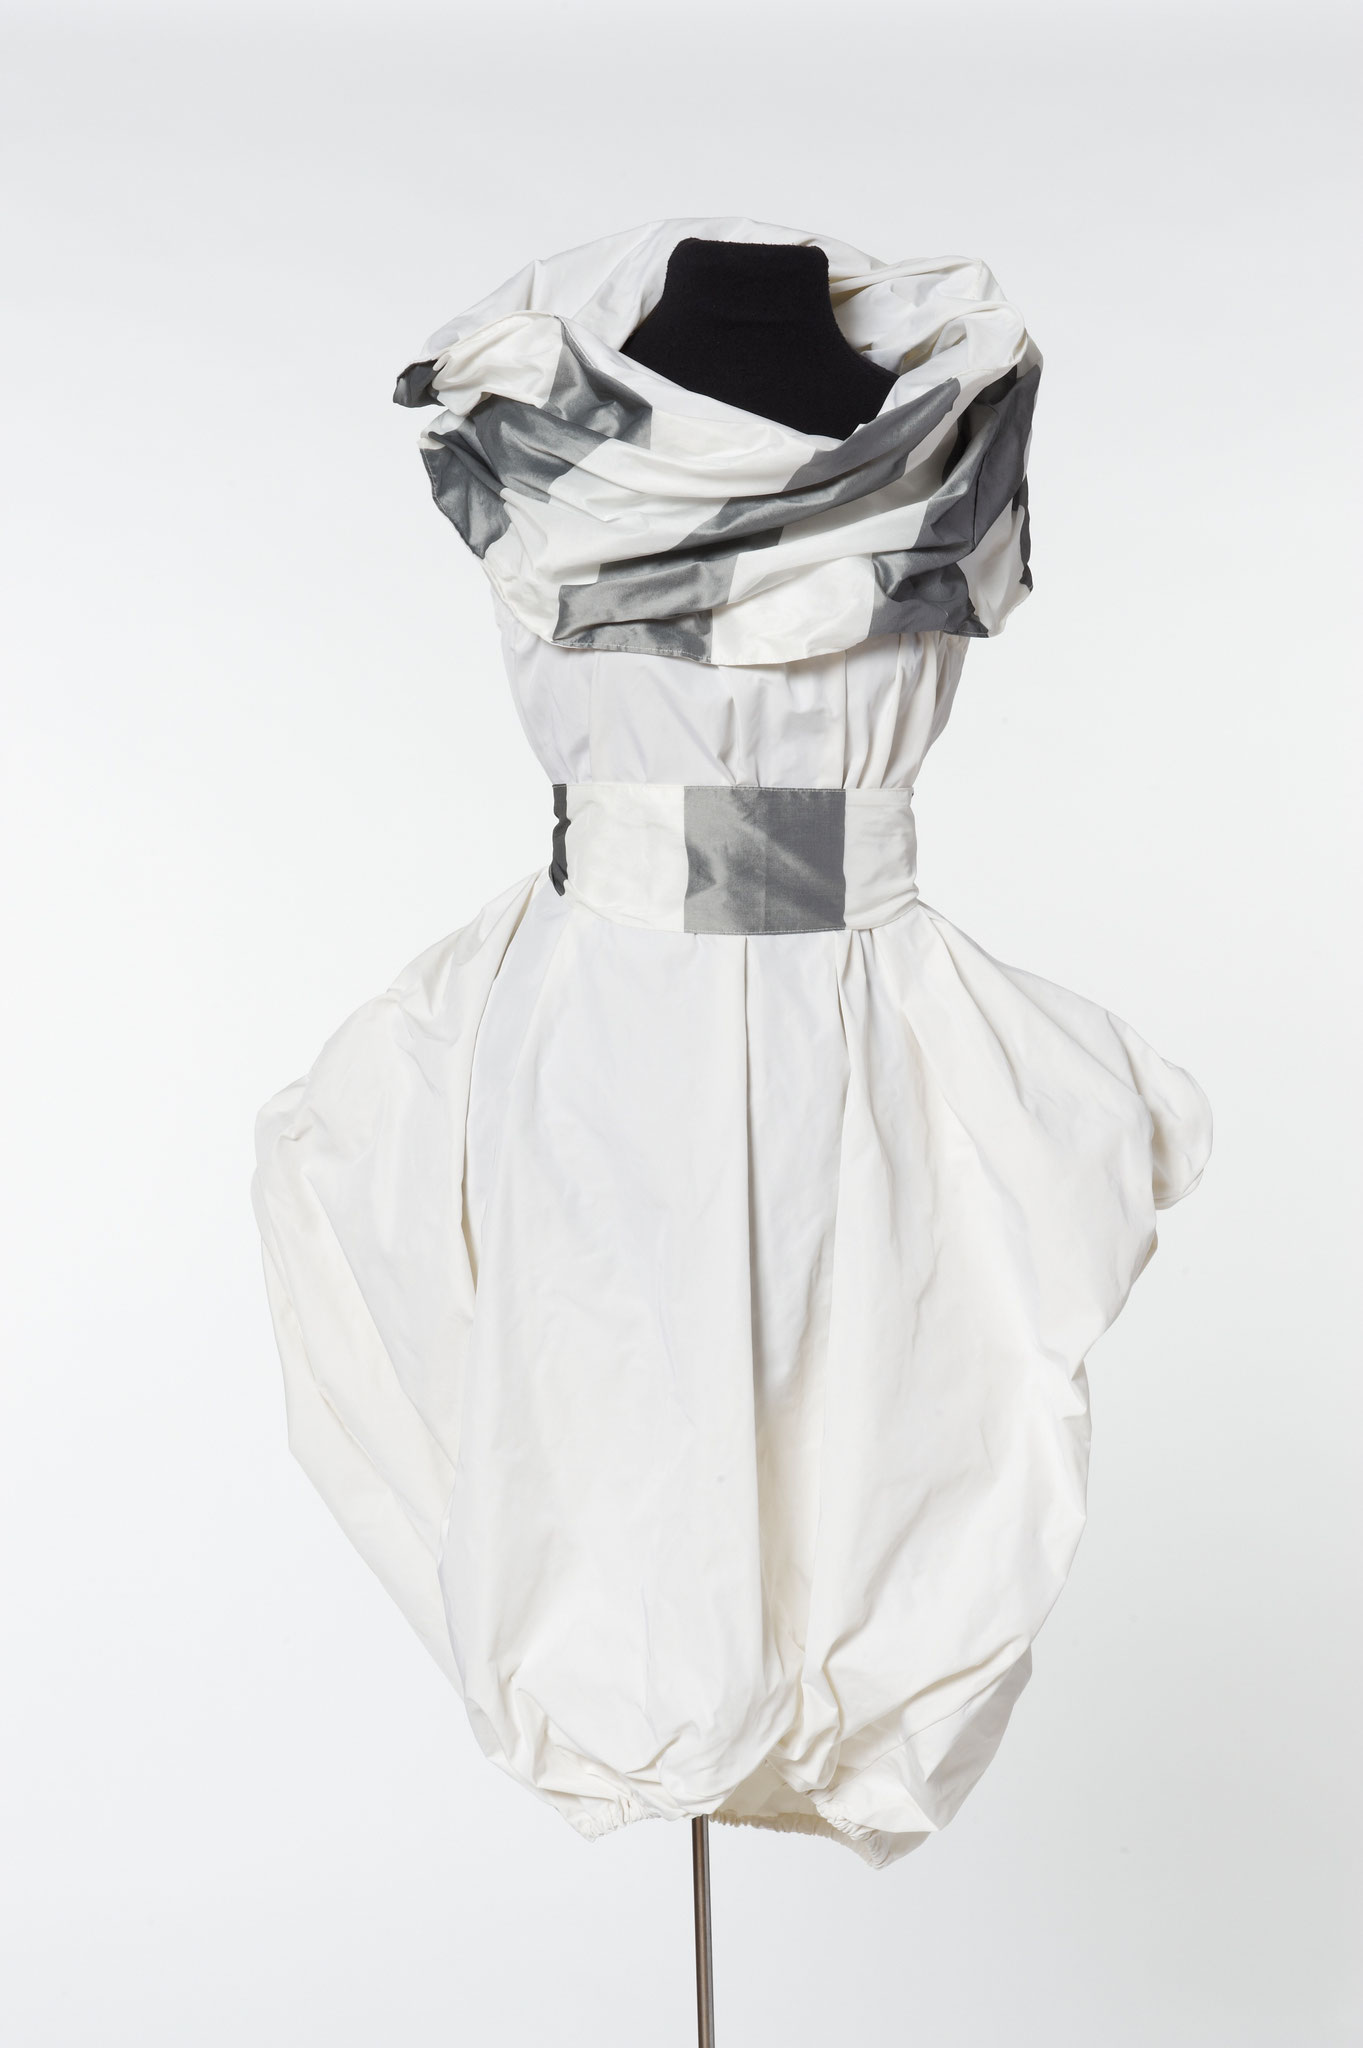 3-teiliges Outfit: Zipfelrock, Schärpe, Schal. Material: Seide/ Mikrofaser